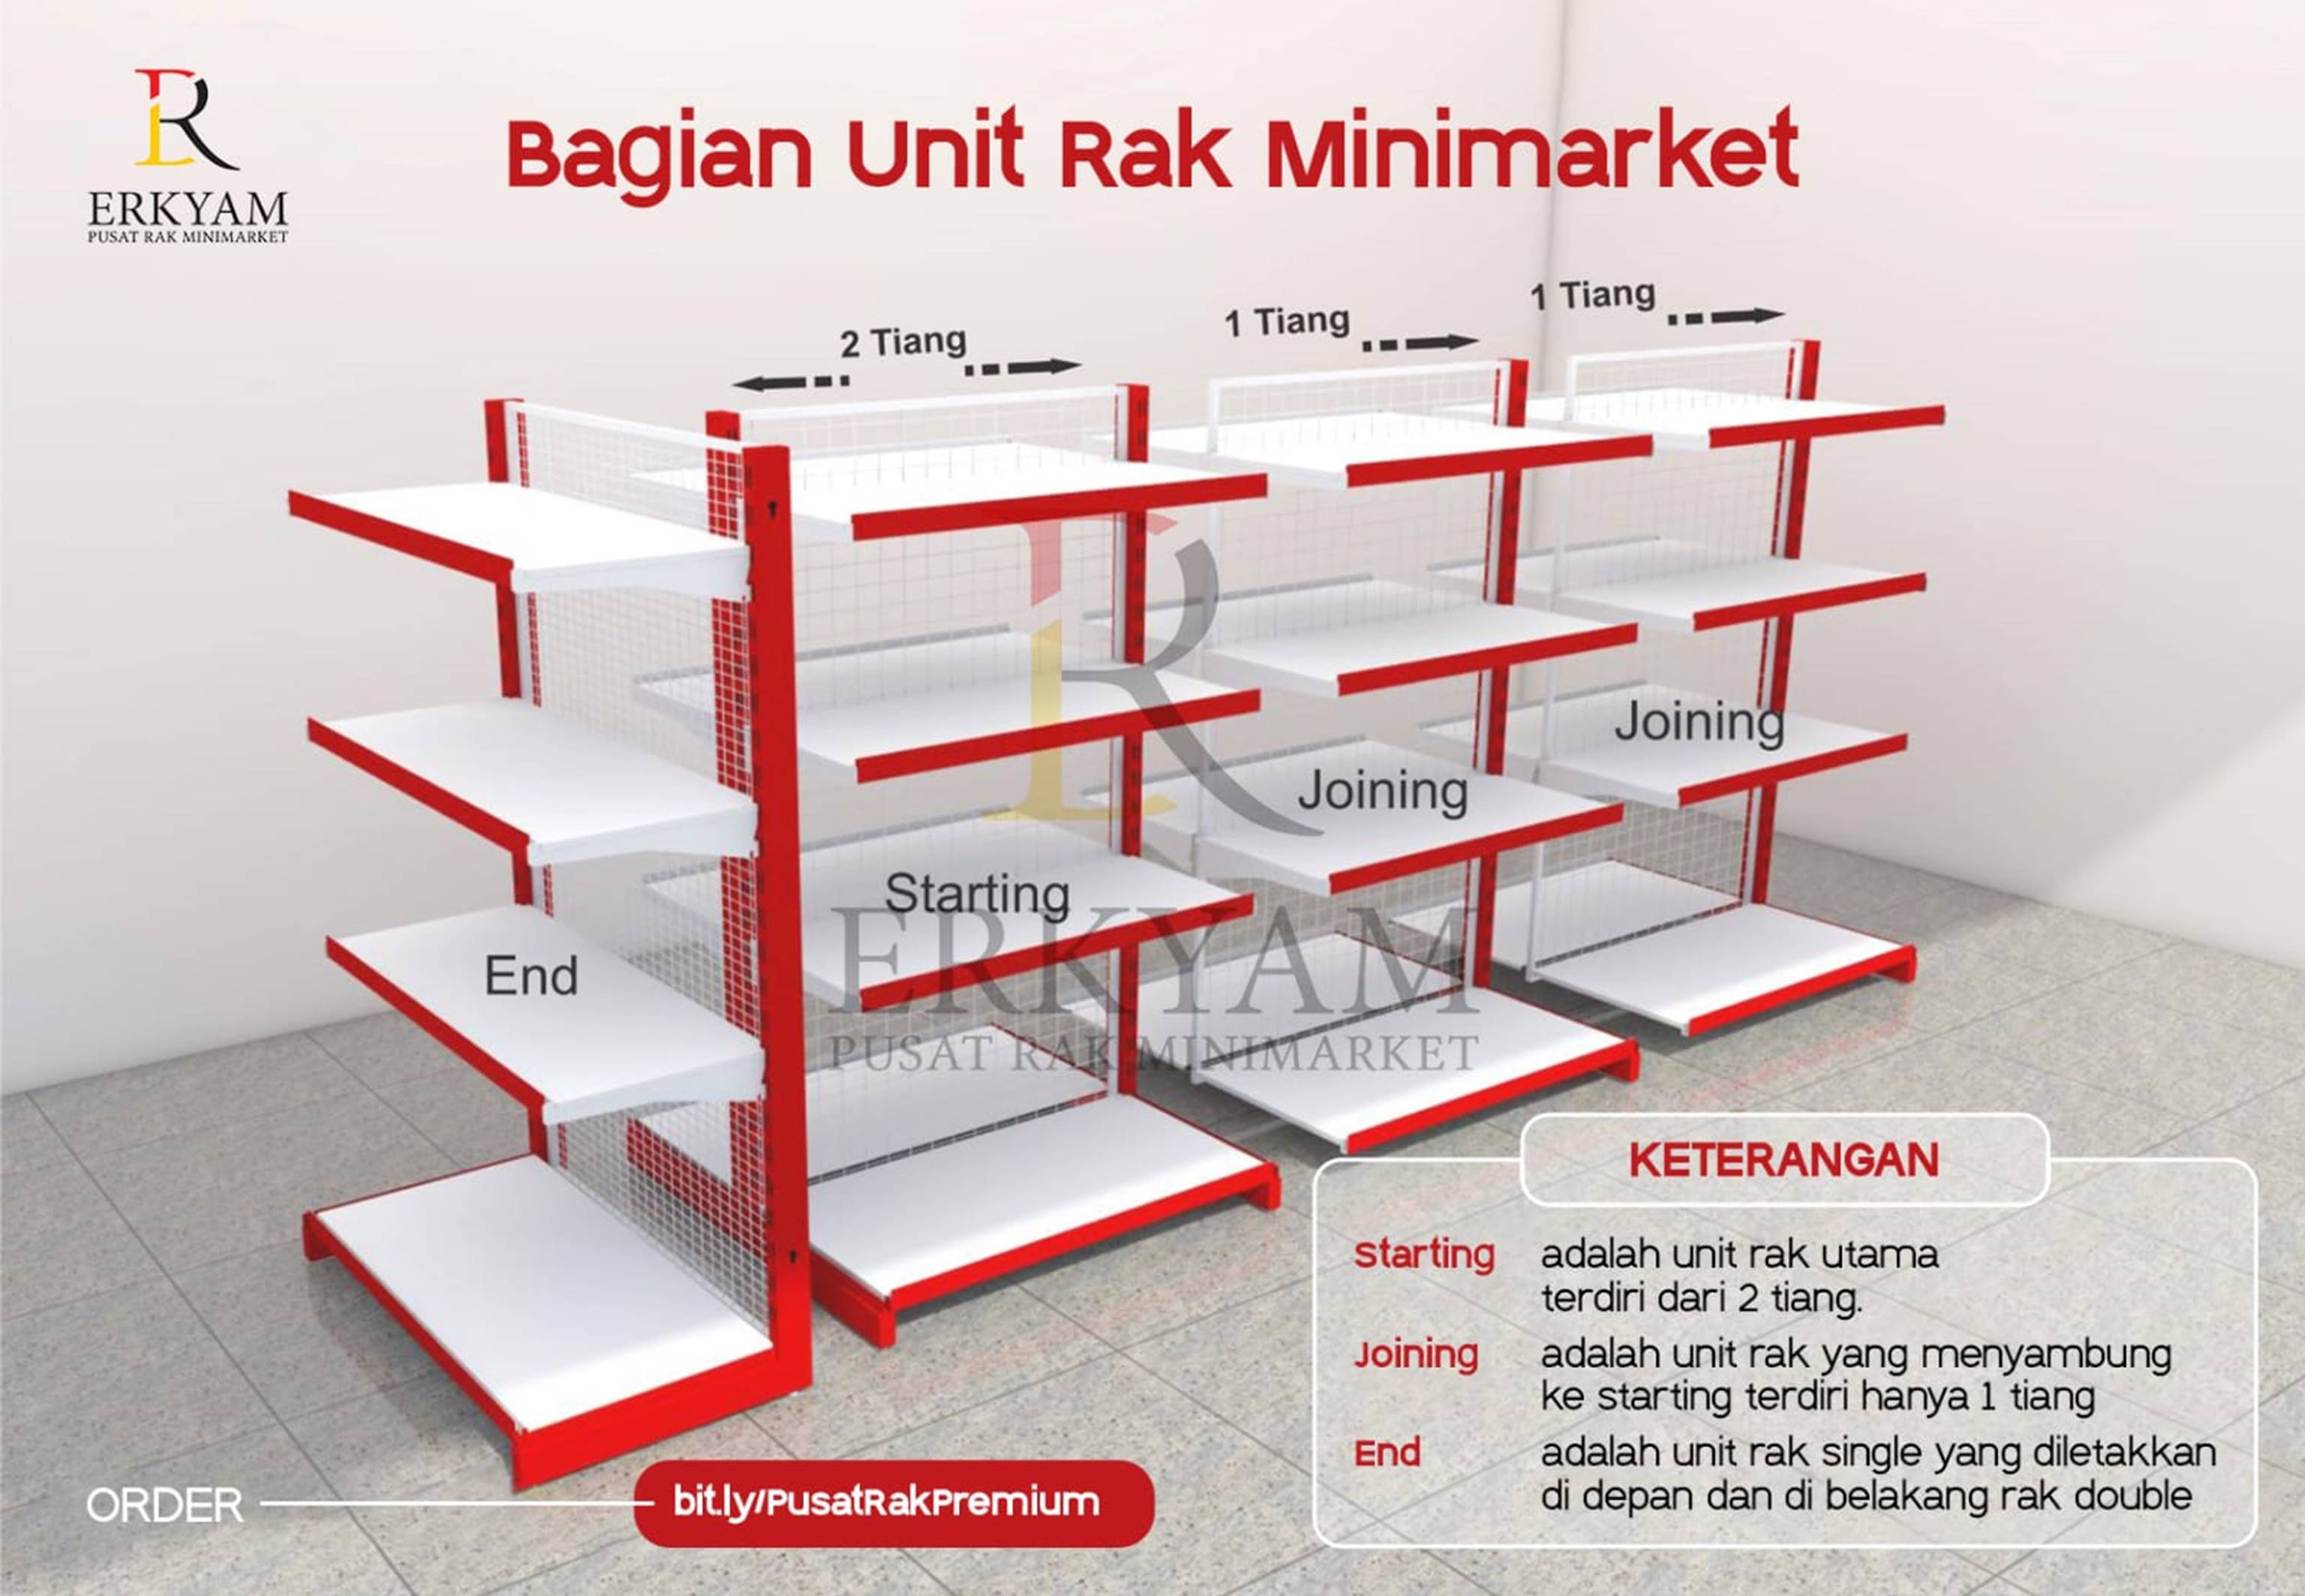 ERKYAM Distributor Rak Display area Bengkulu Tengah Bengkulu